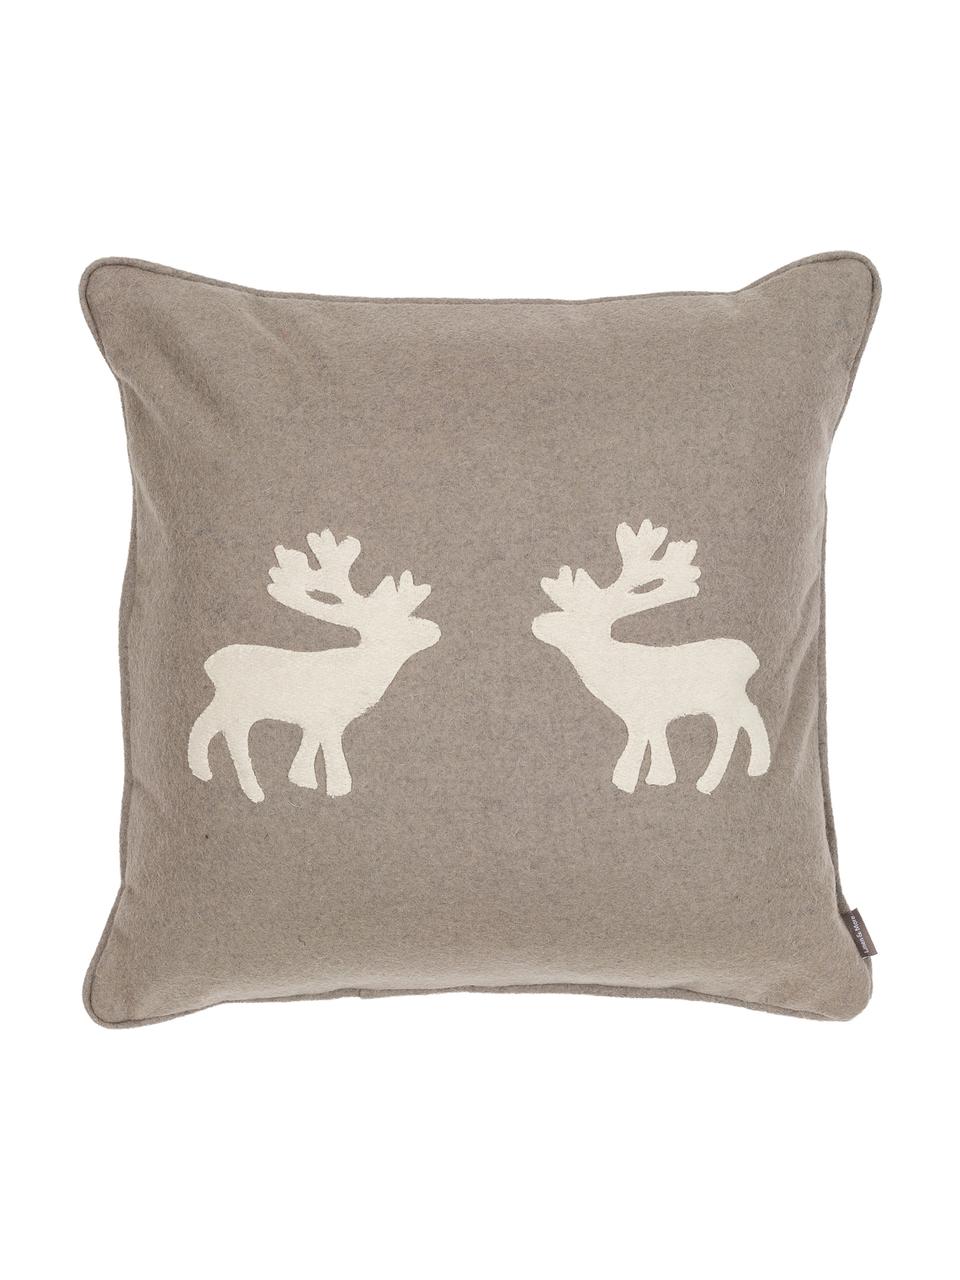 Cuscino in feltro di lana Sister Reindeer, Sabbia, bianco incrinato, Larg. 45 x Lung. 45 cm